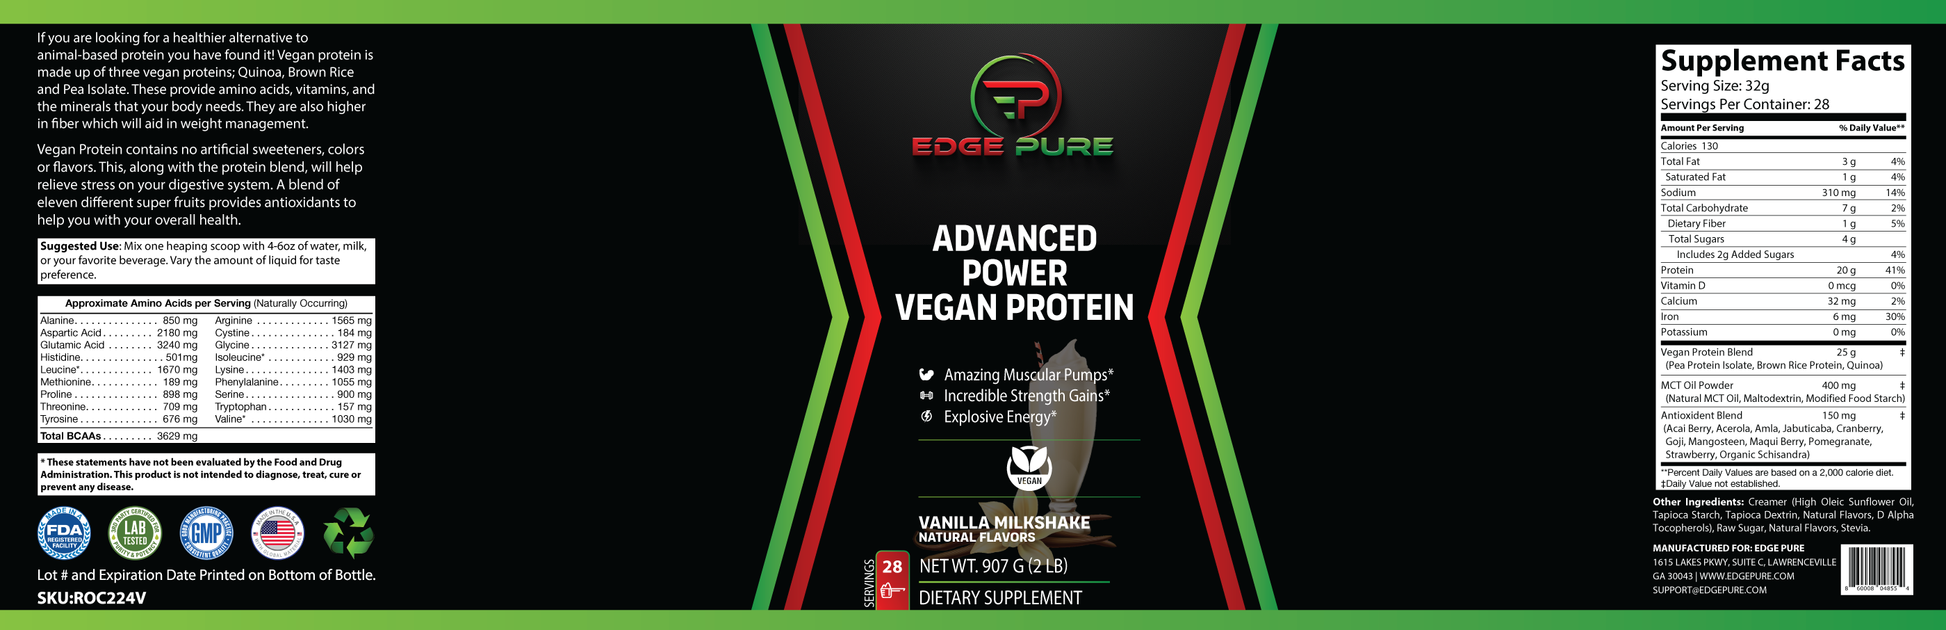 Advanced Power Vegan Protein - Vanilla Milkshake (2lb) Edge Pure